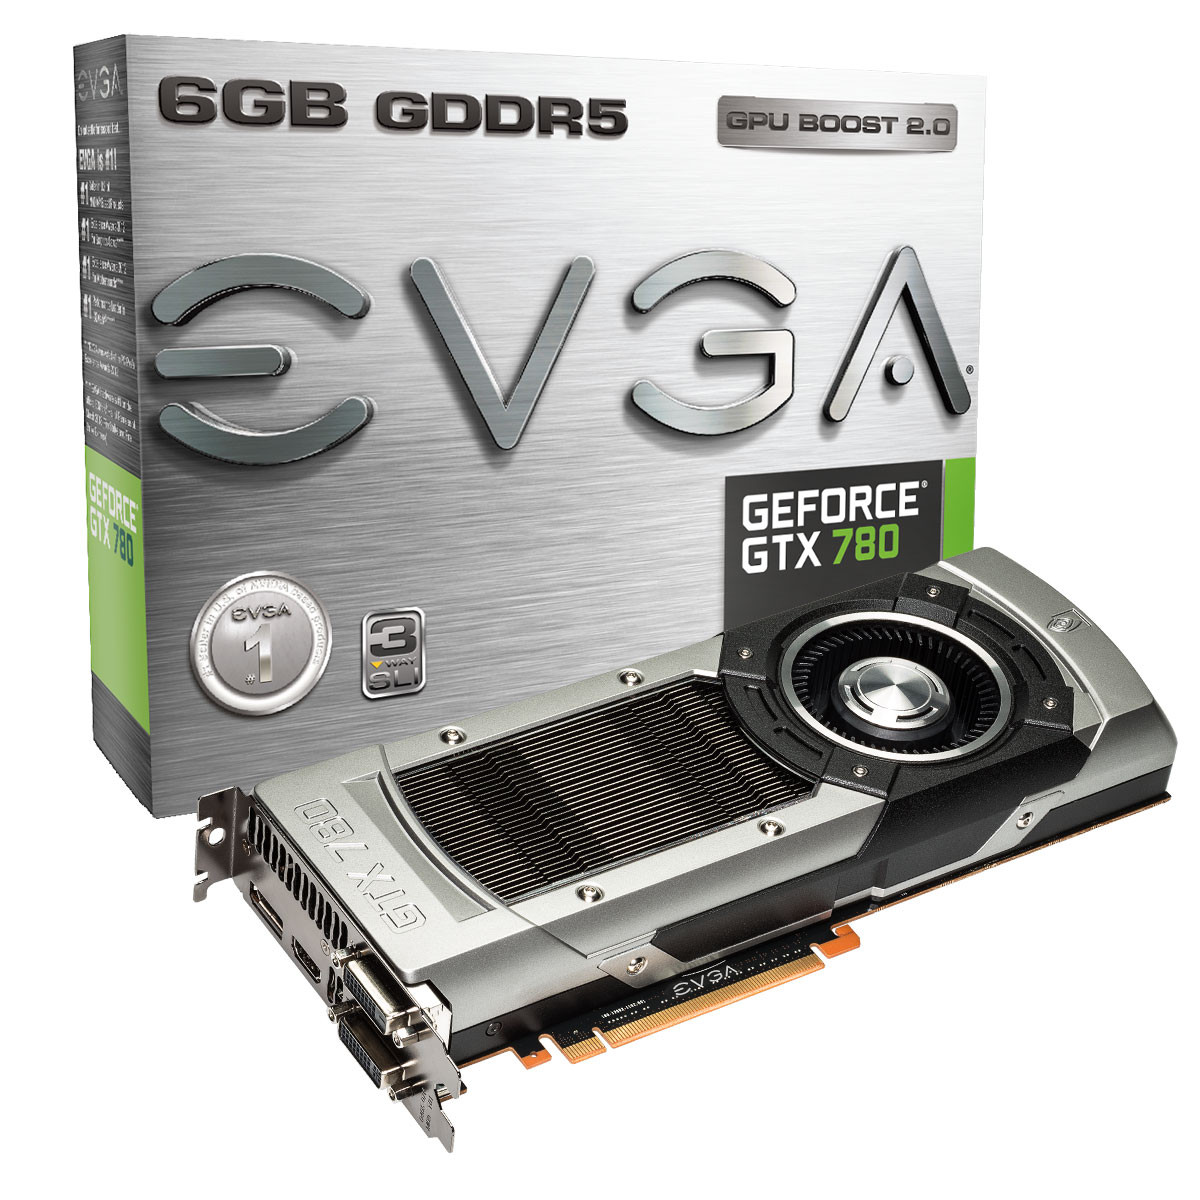 EVGA GTX 780 6GB Reference